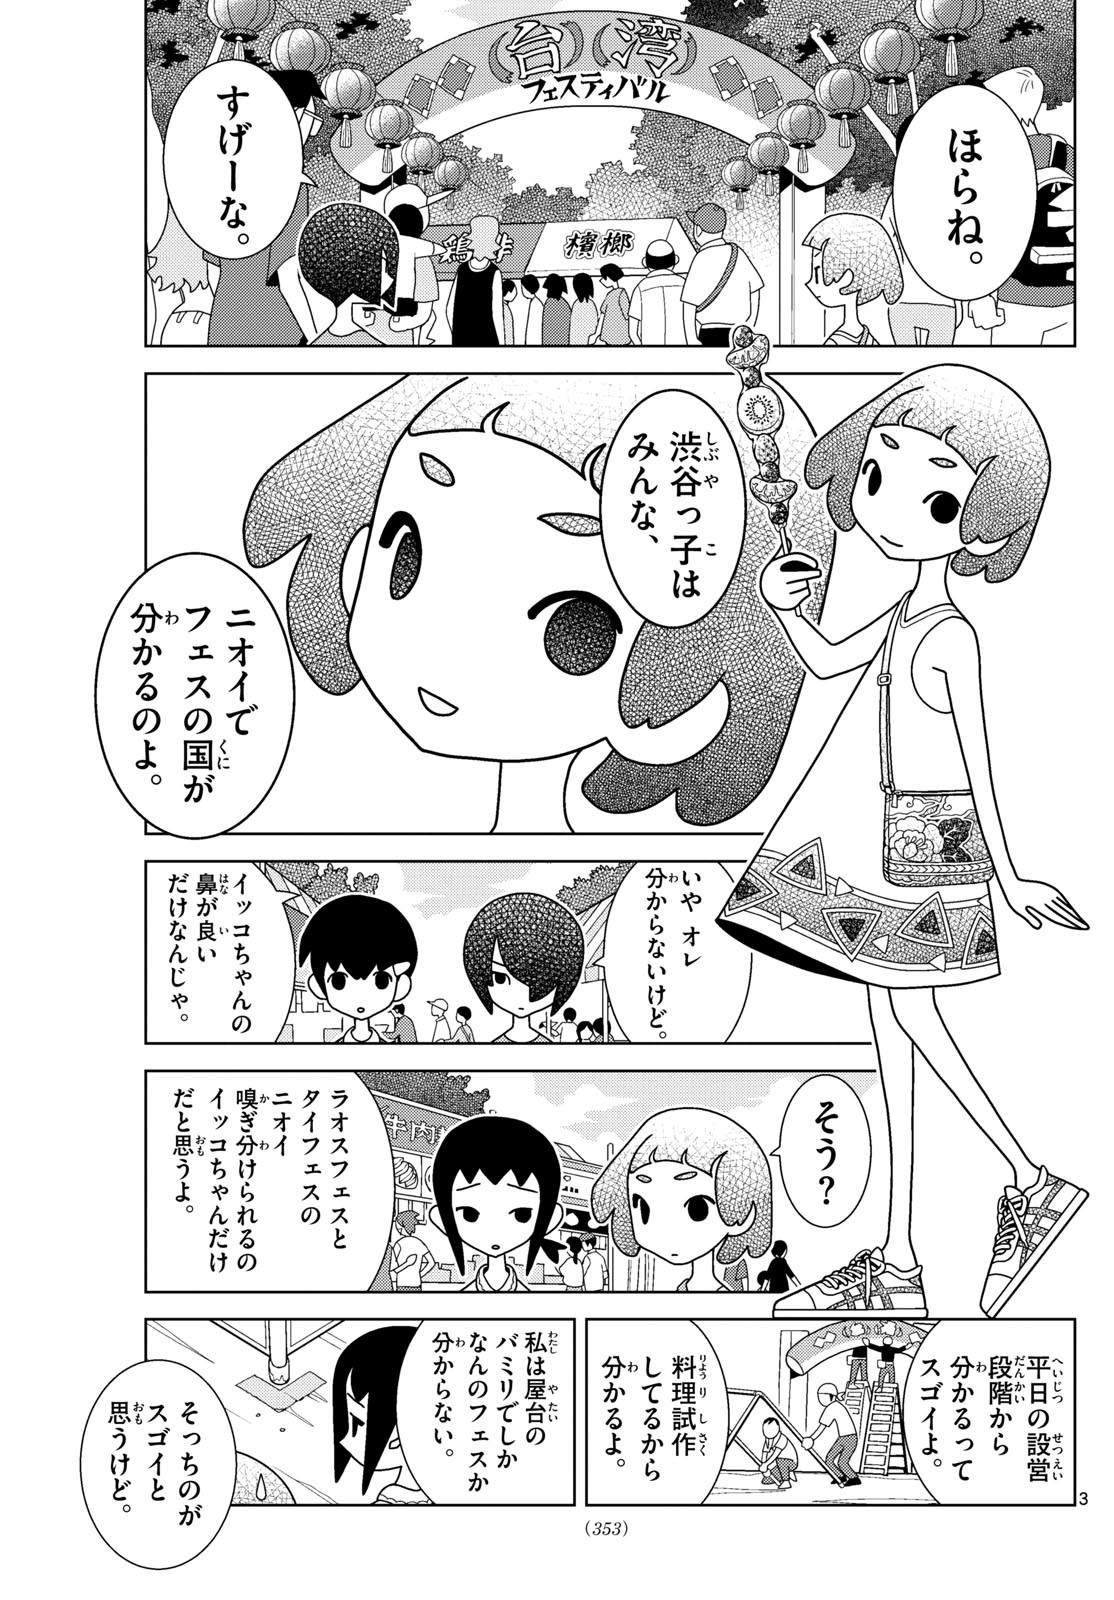 Shibuya Near Family - Chapter 097 - Page 3